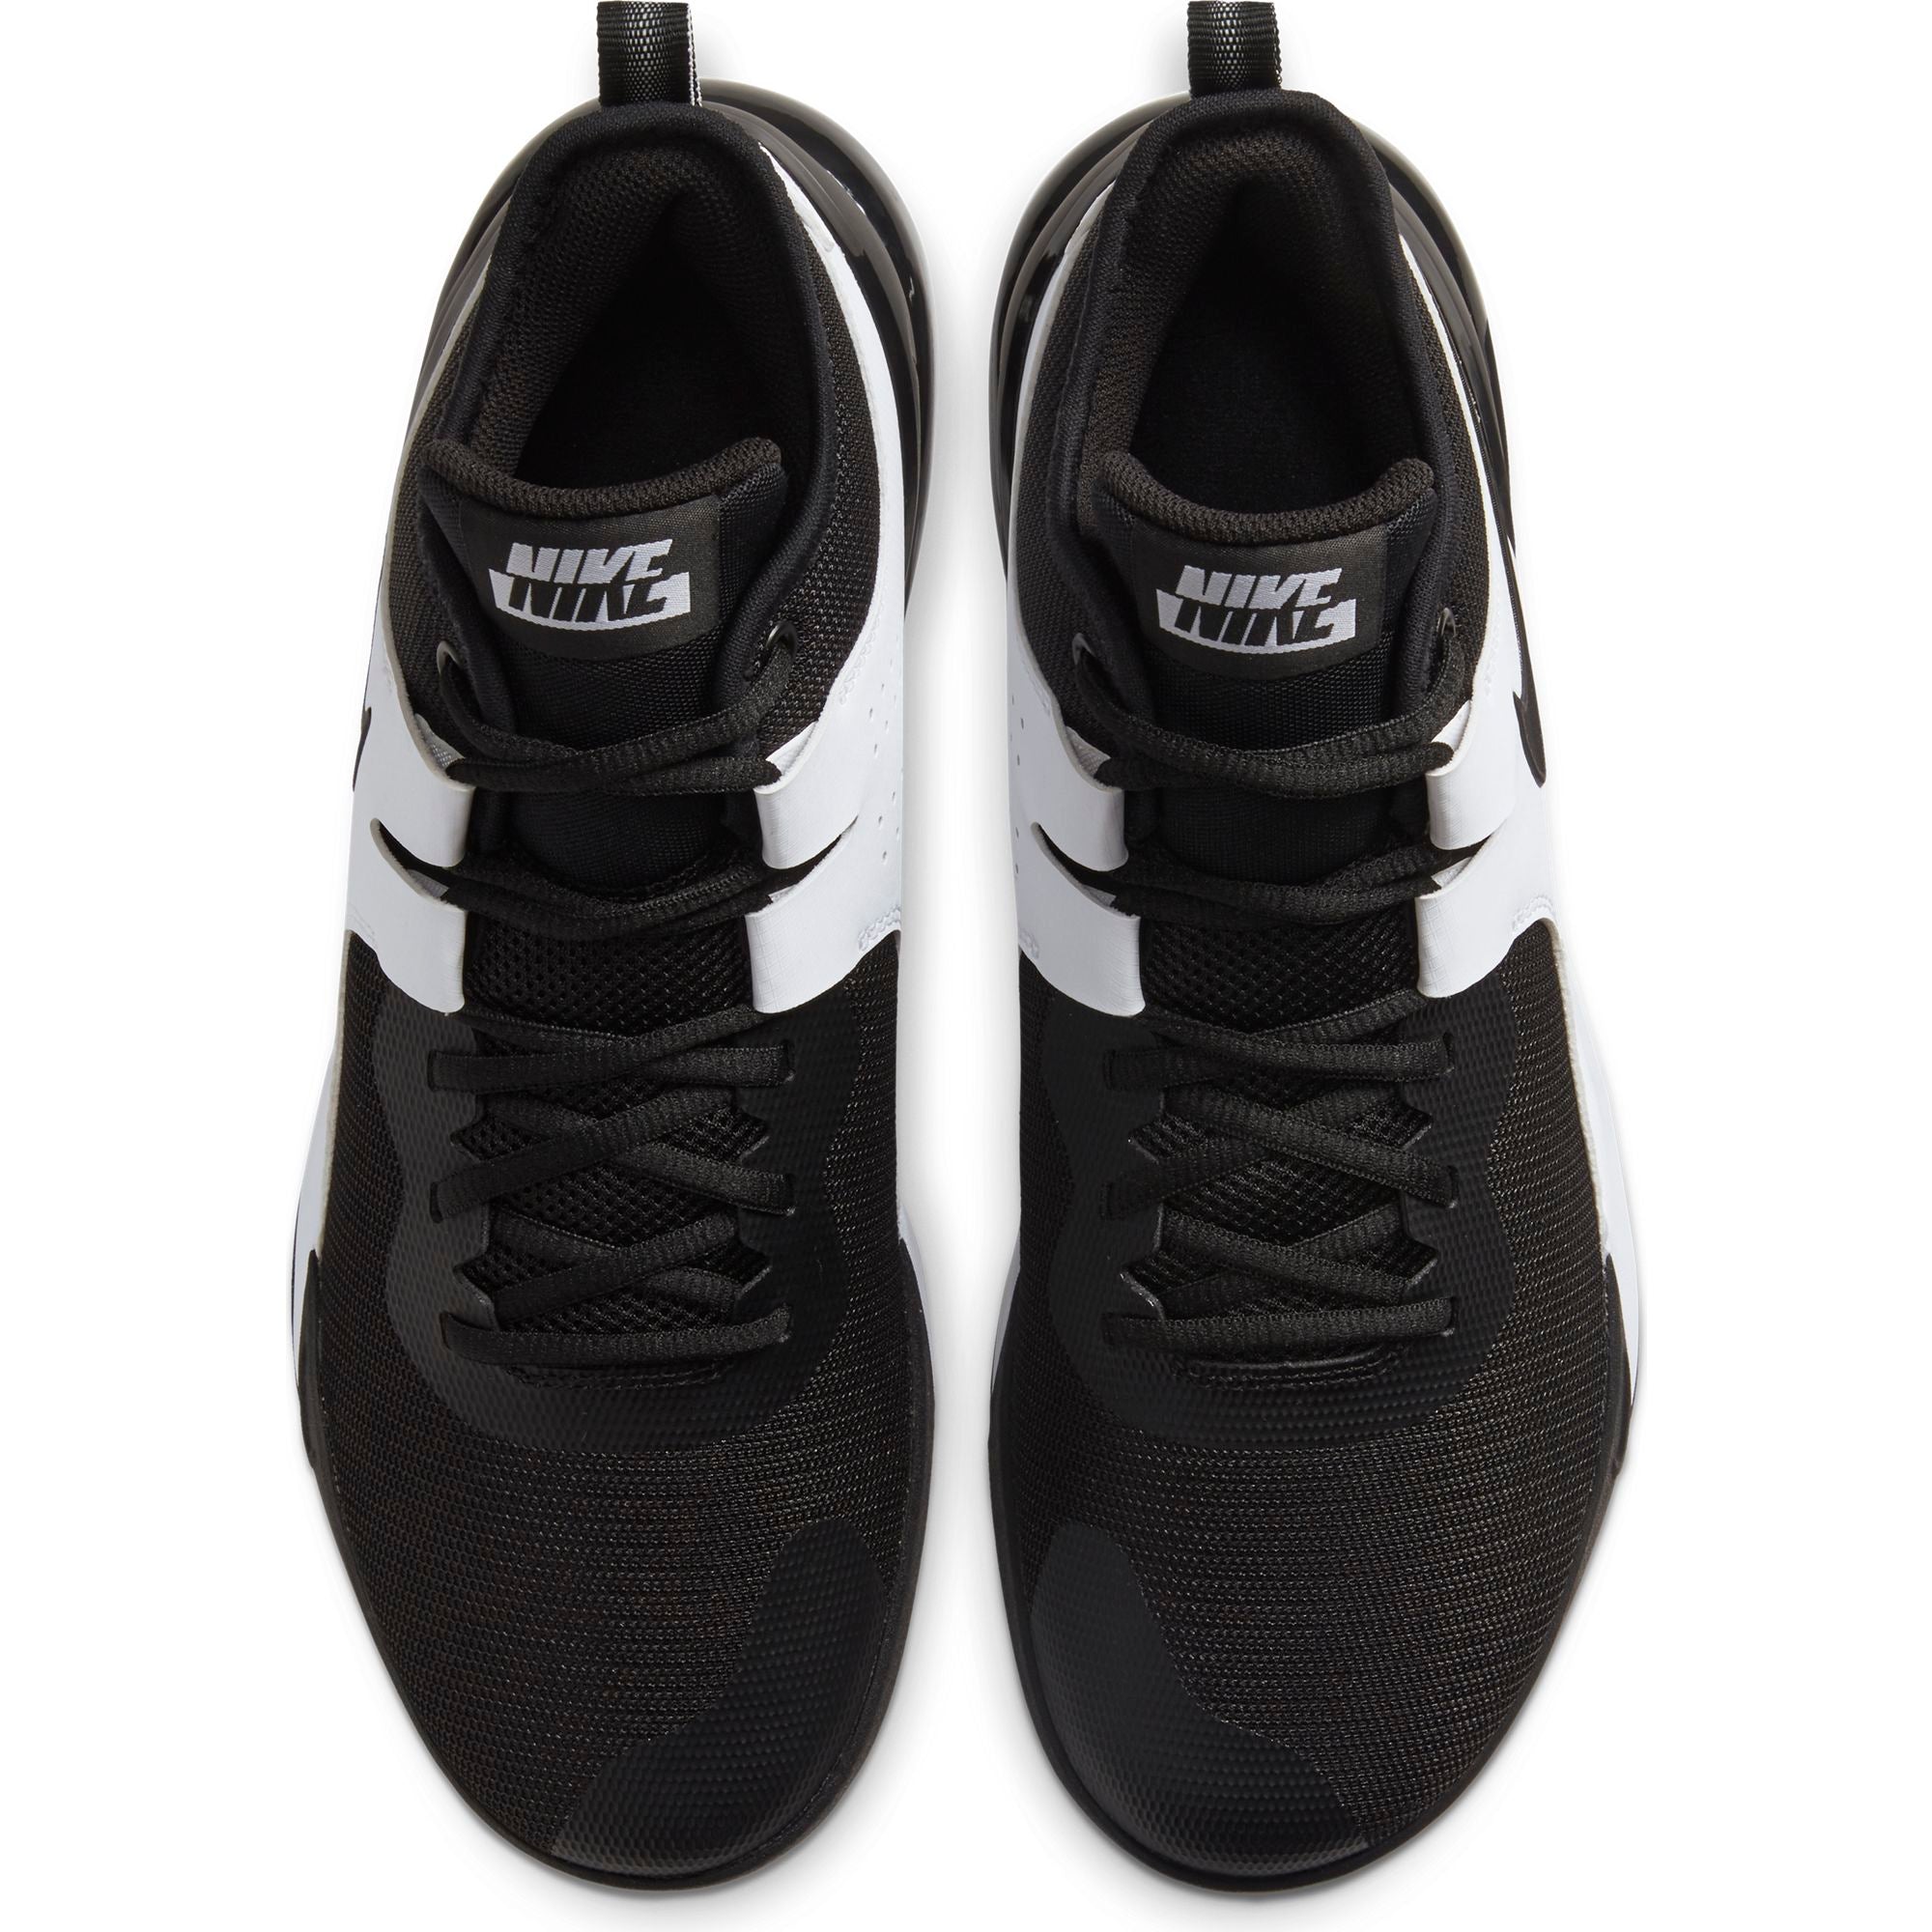 Nike Basketball Air Max Impact Basketball Boot/Shoe - Black/White